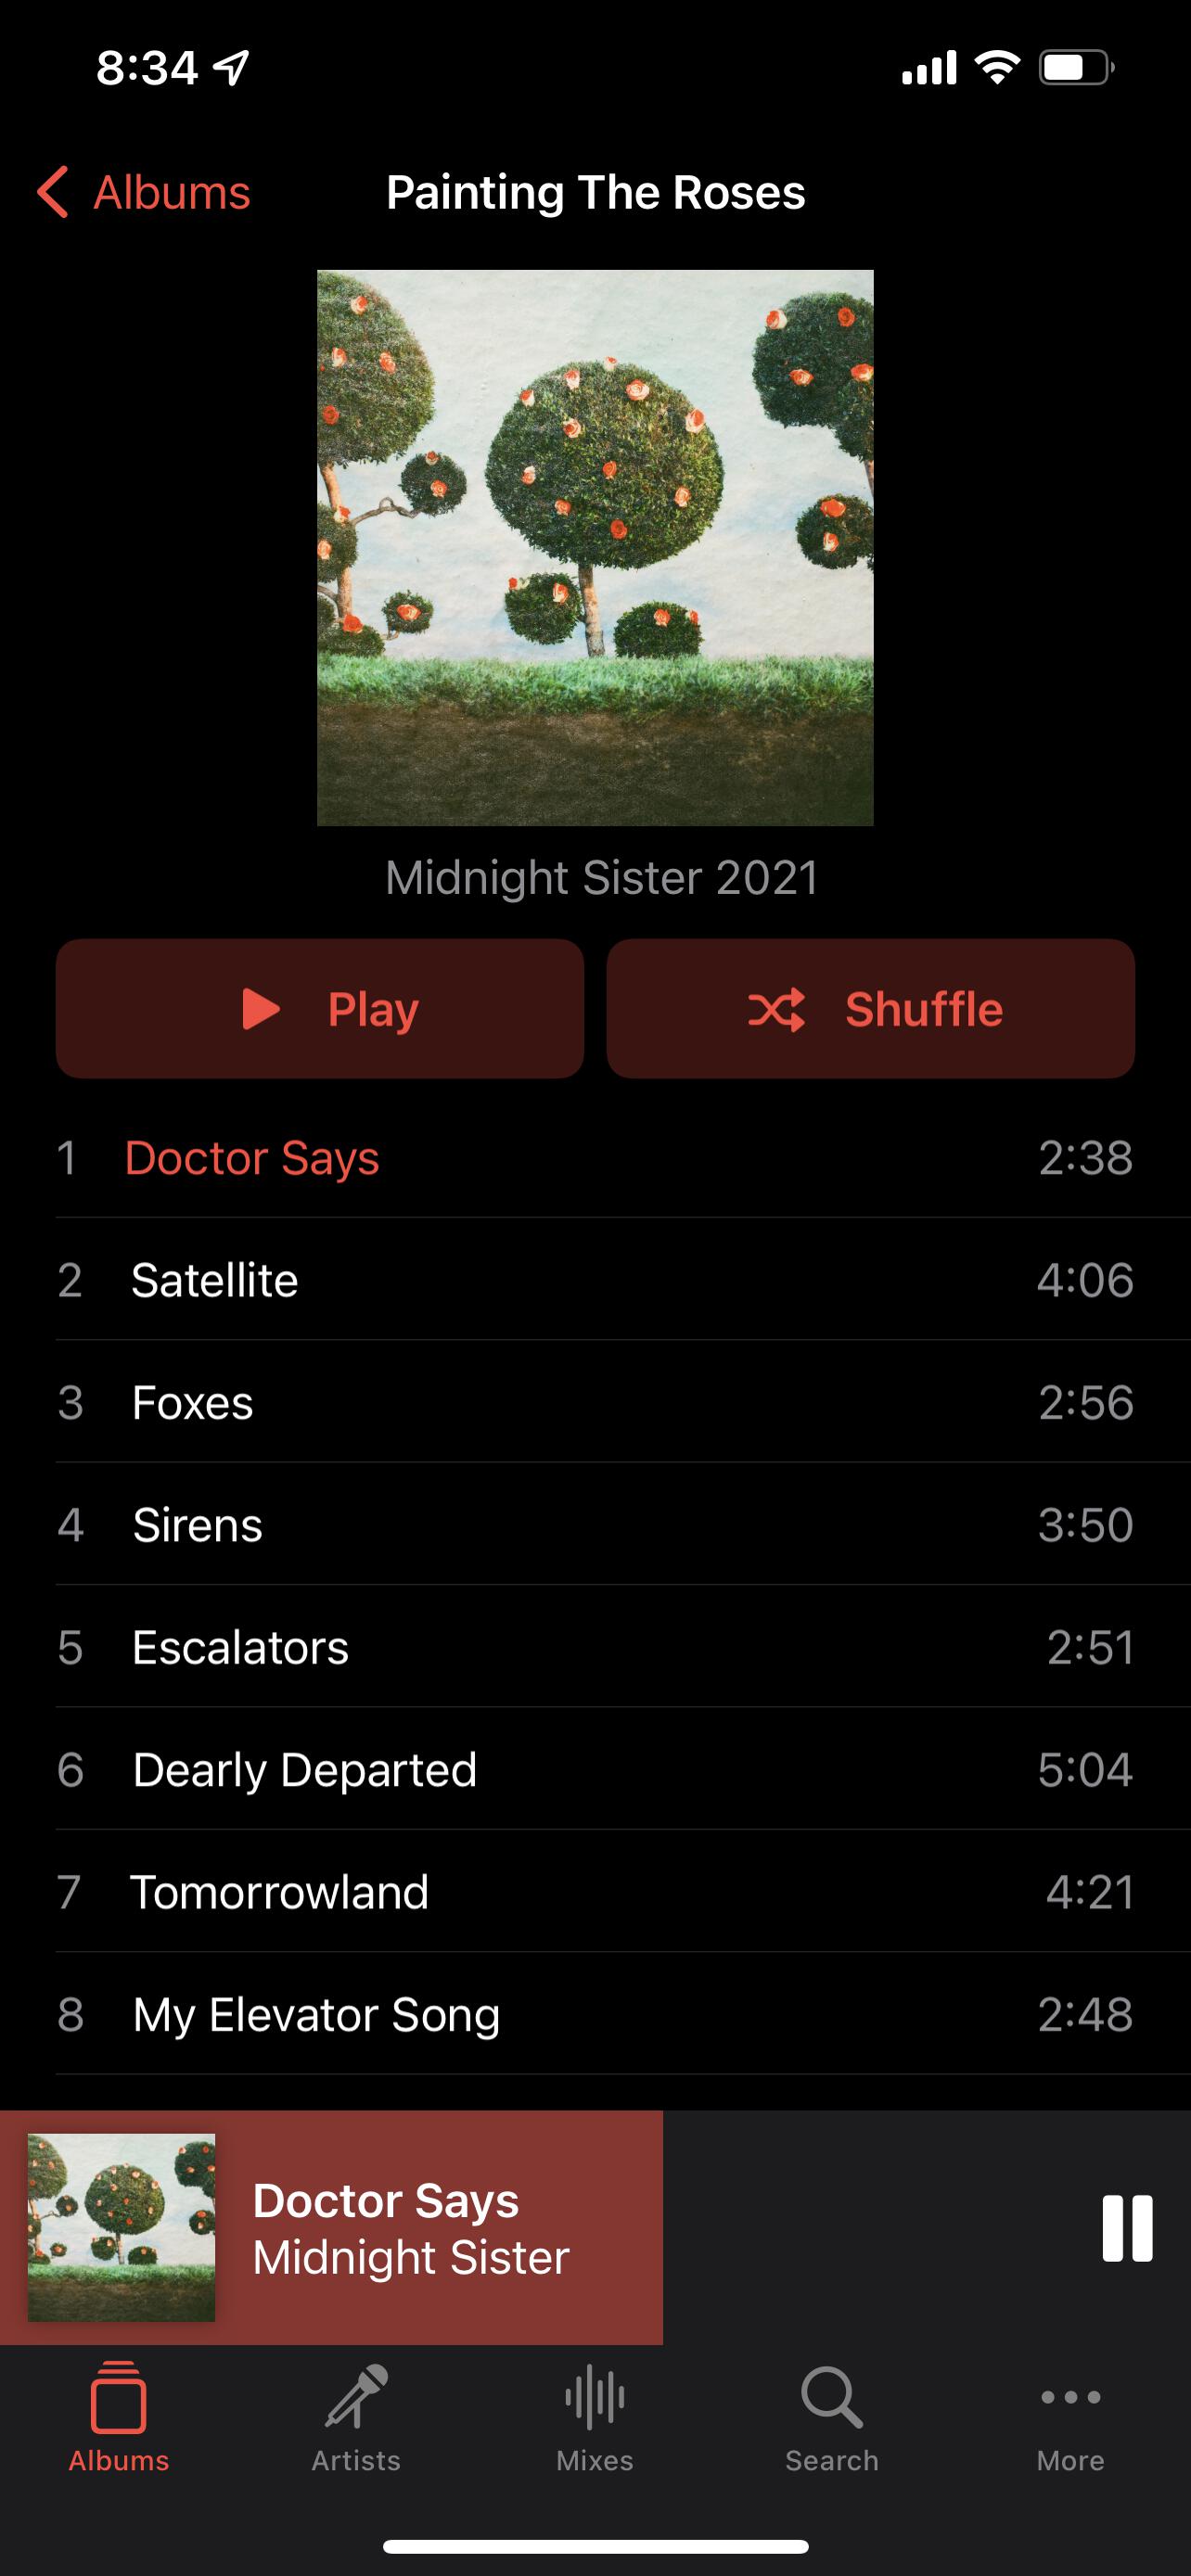 Image of Mixtapes' dark theme album view